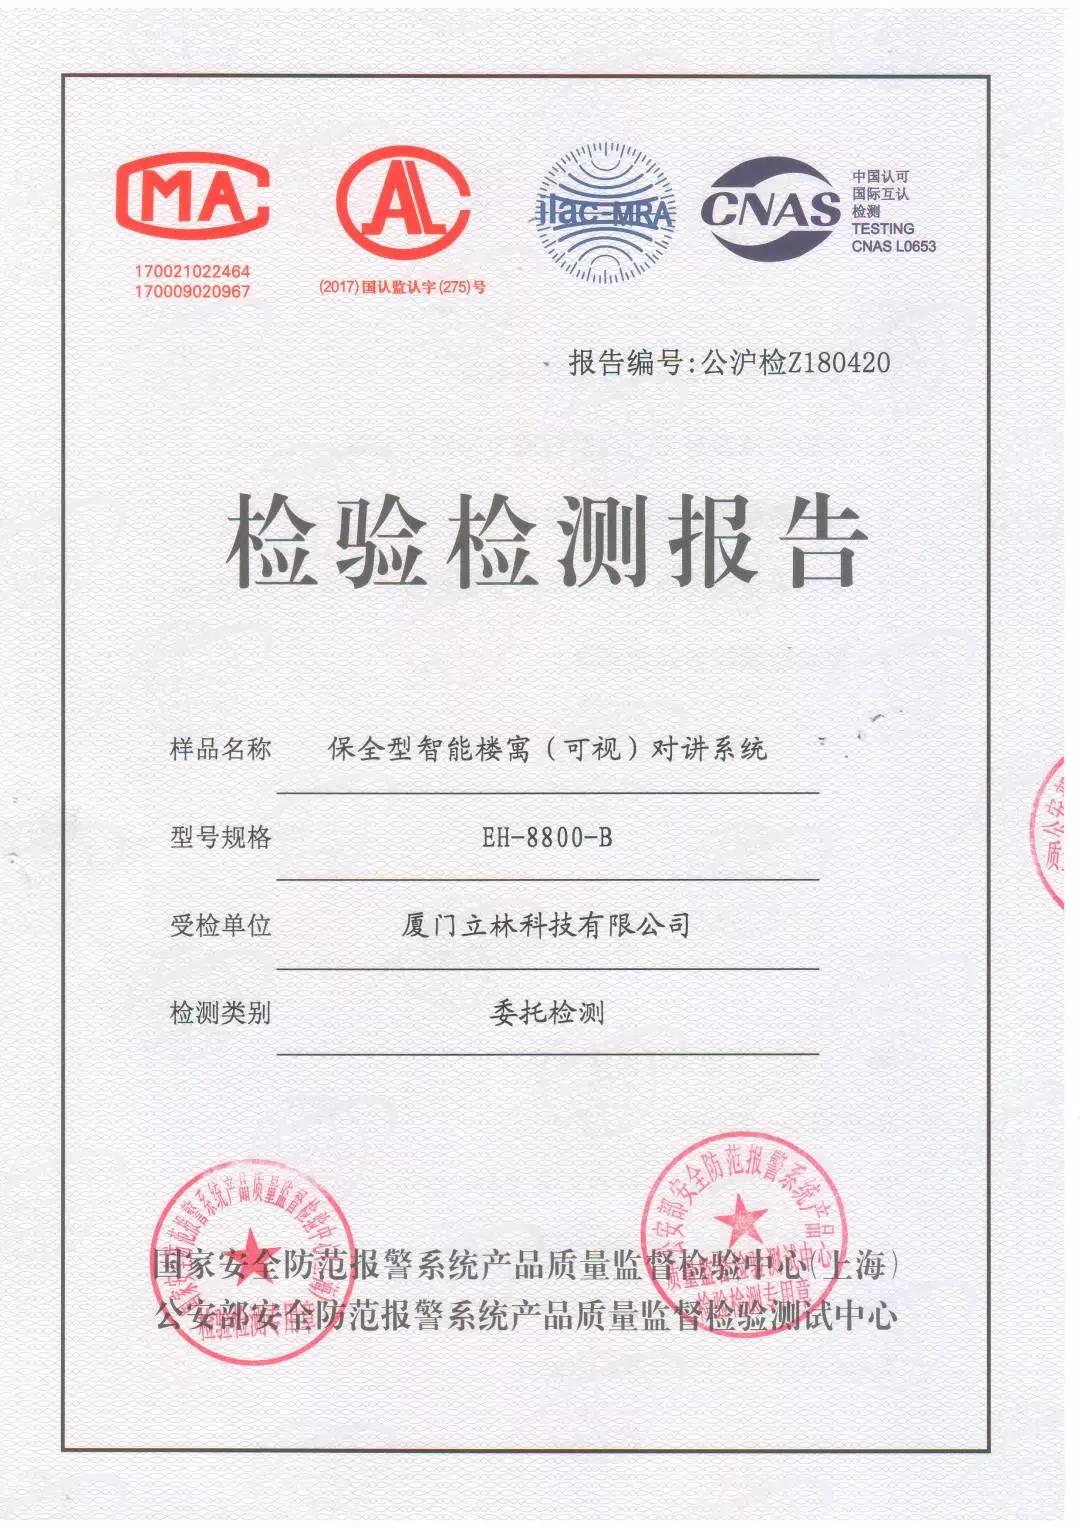 the testing certification of LEELEN